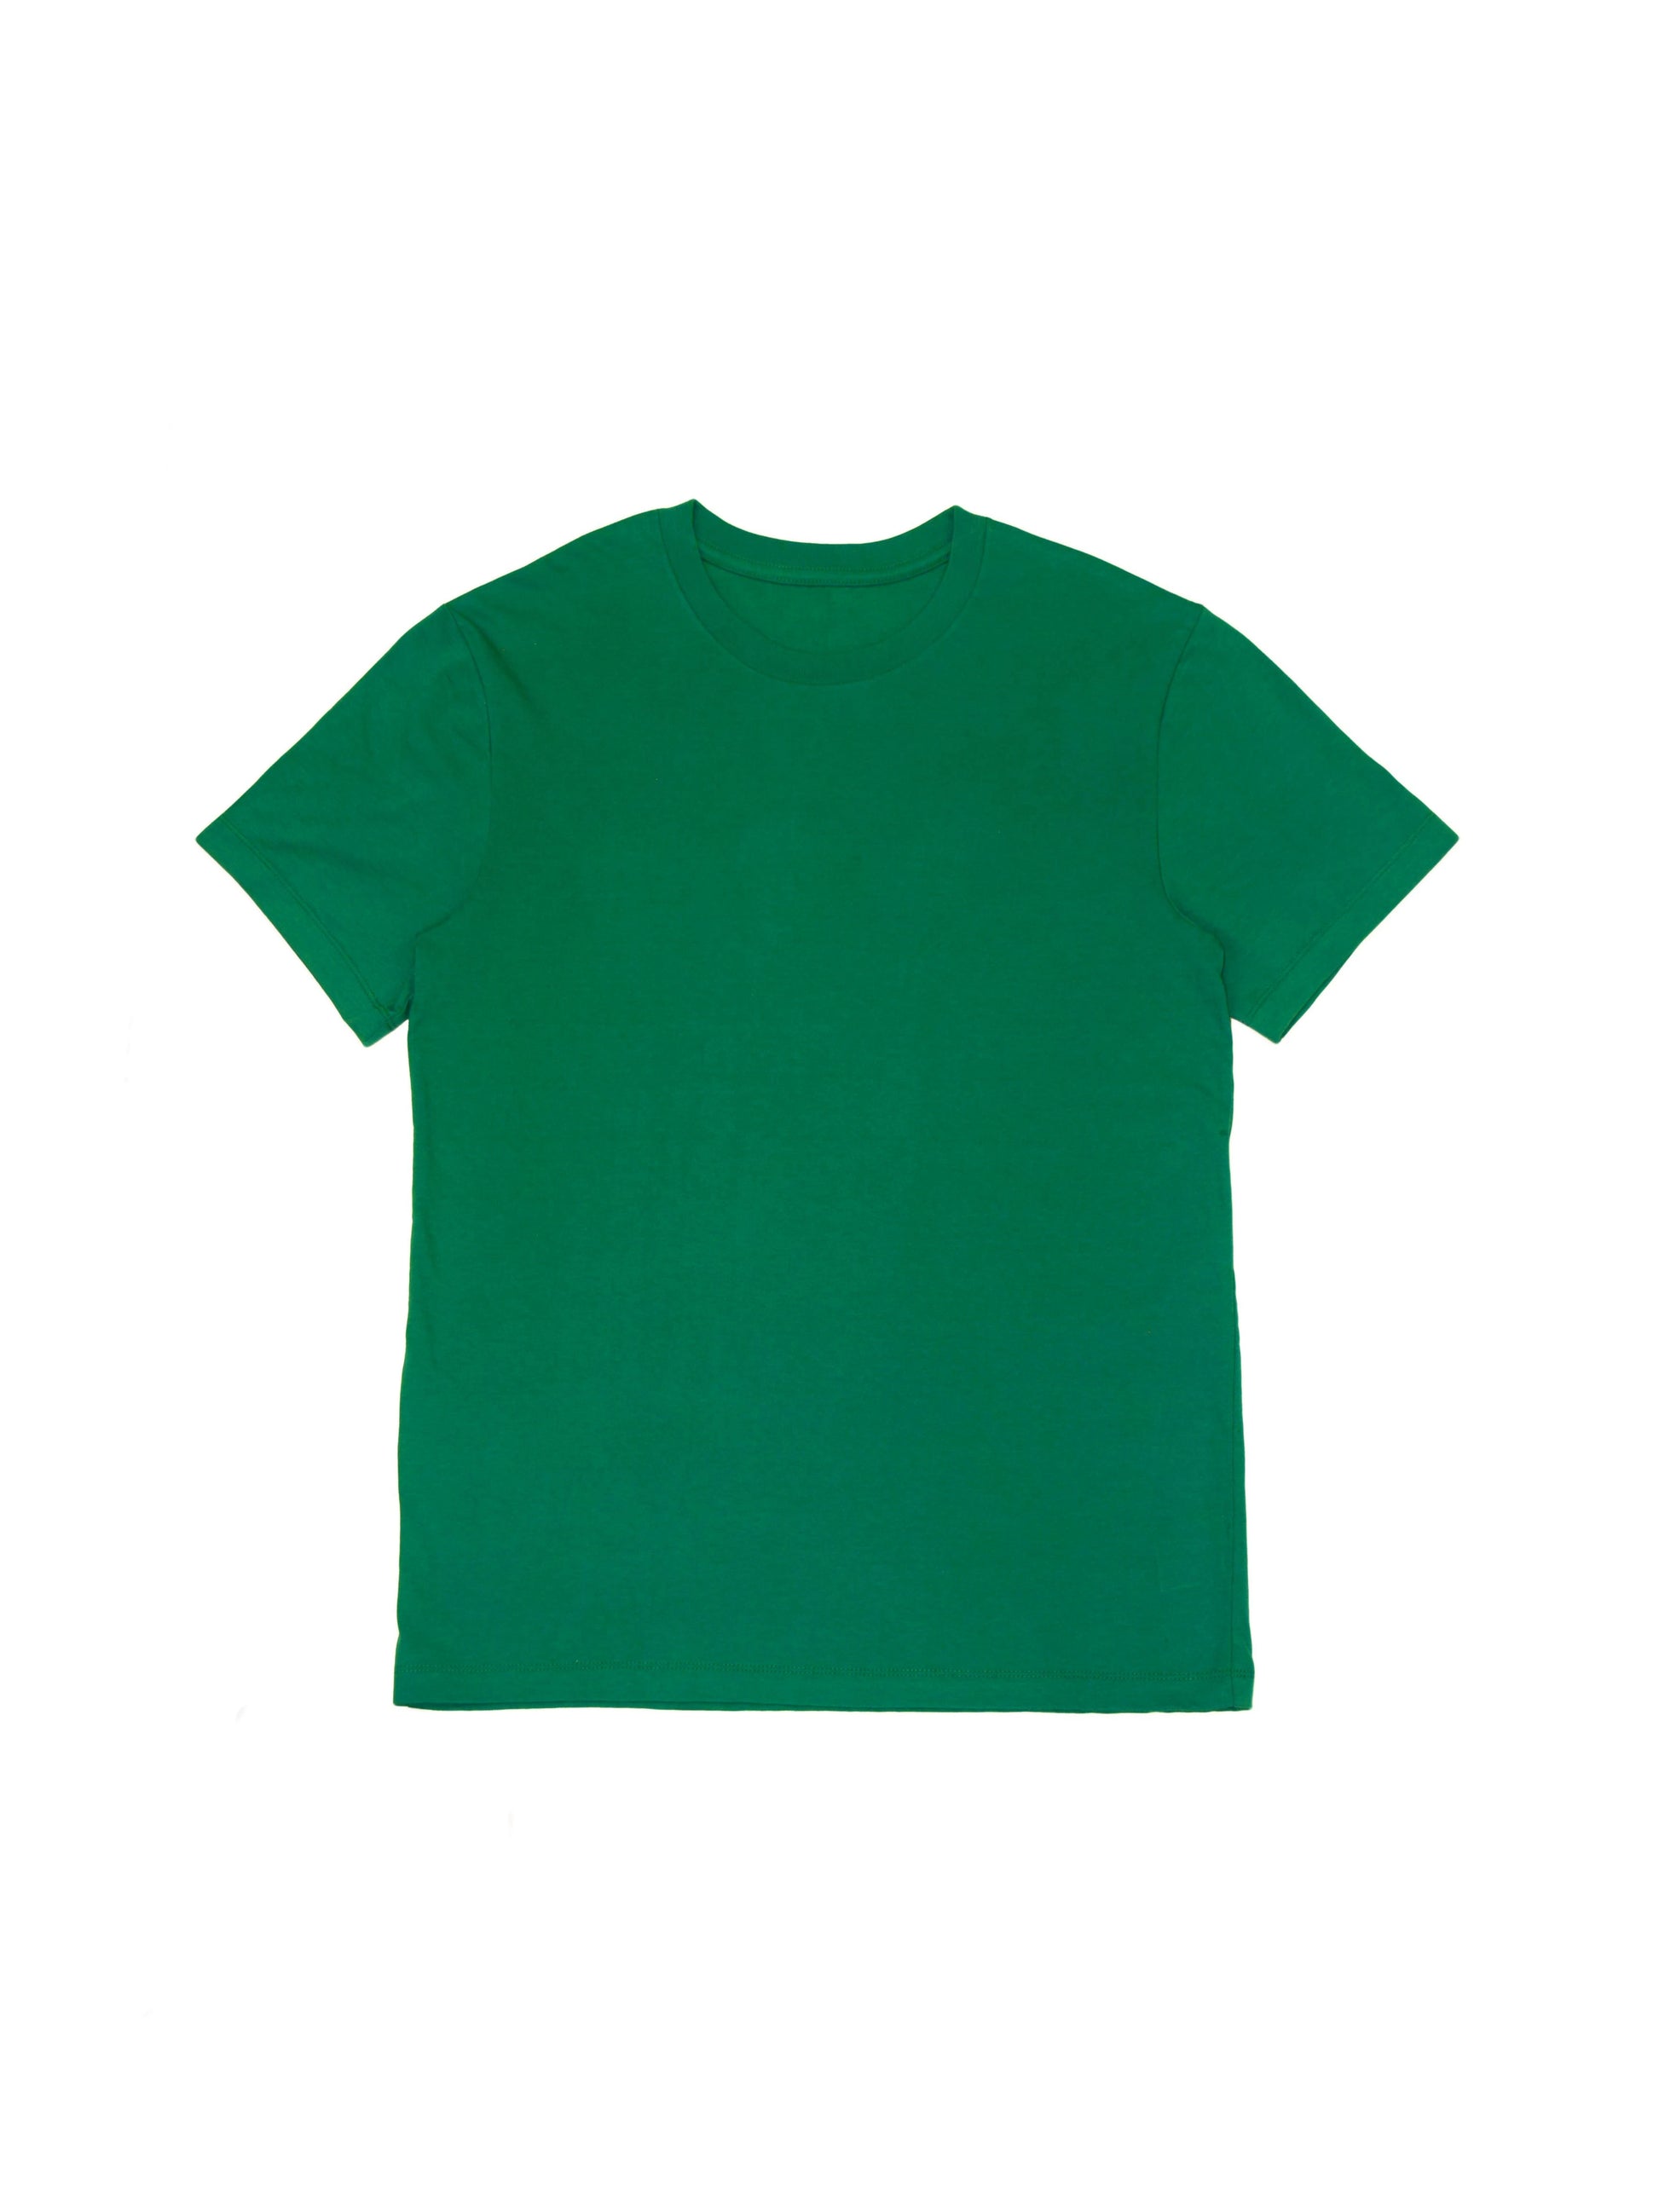 Emerald Green Tshirt - Boxy Fit - Premium Organic Cotton – Gabe